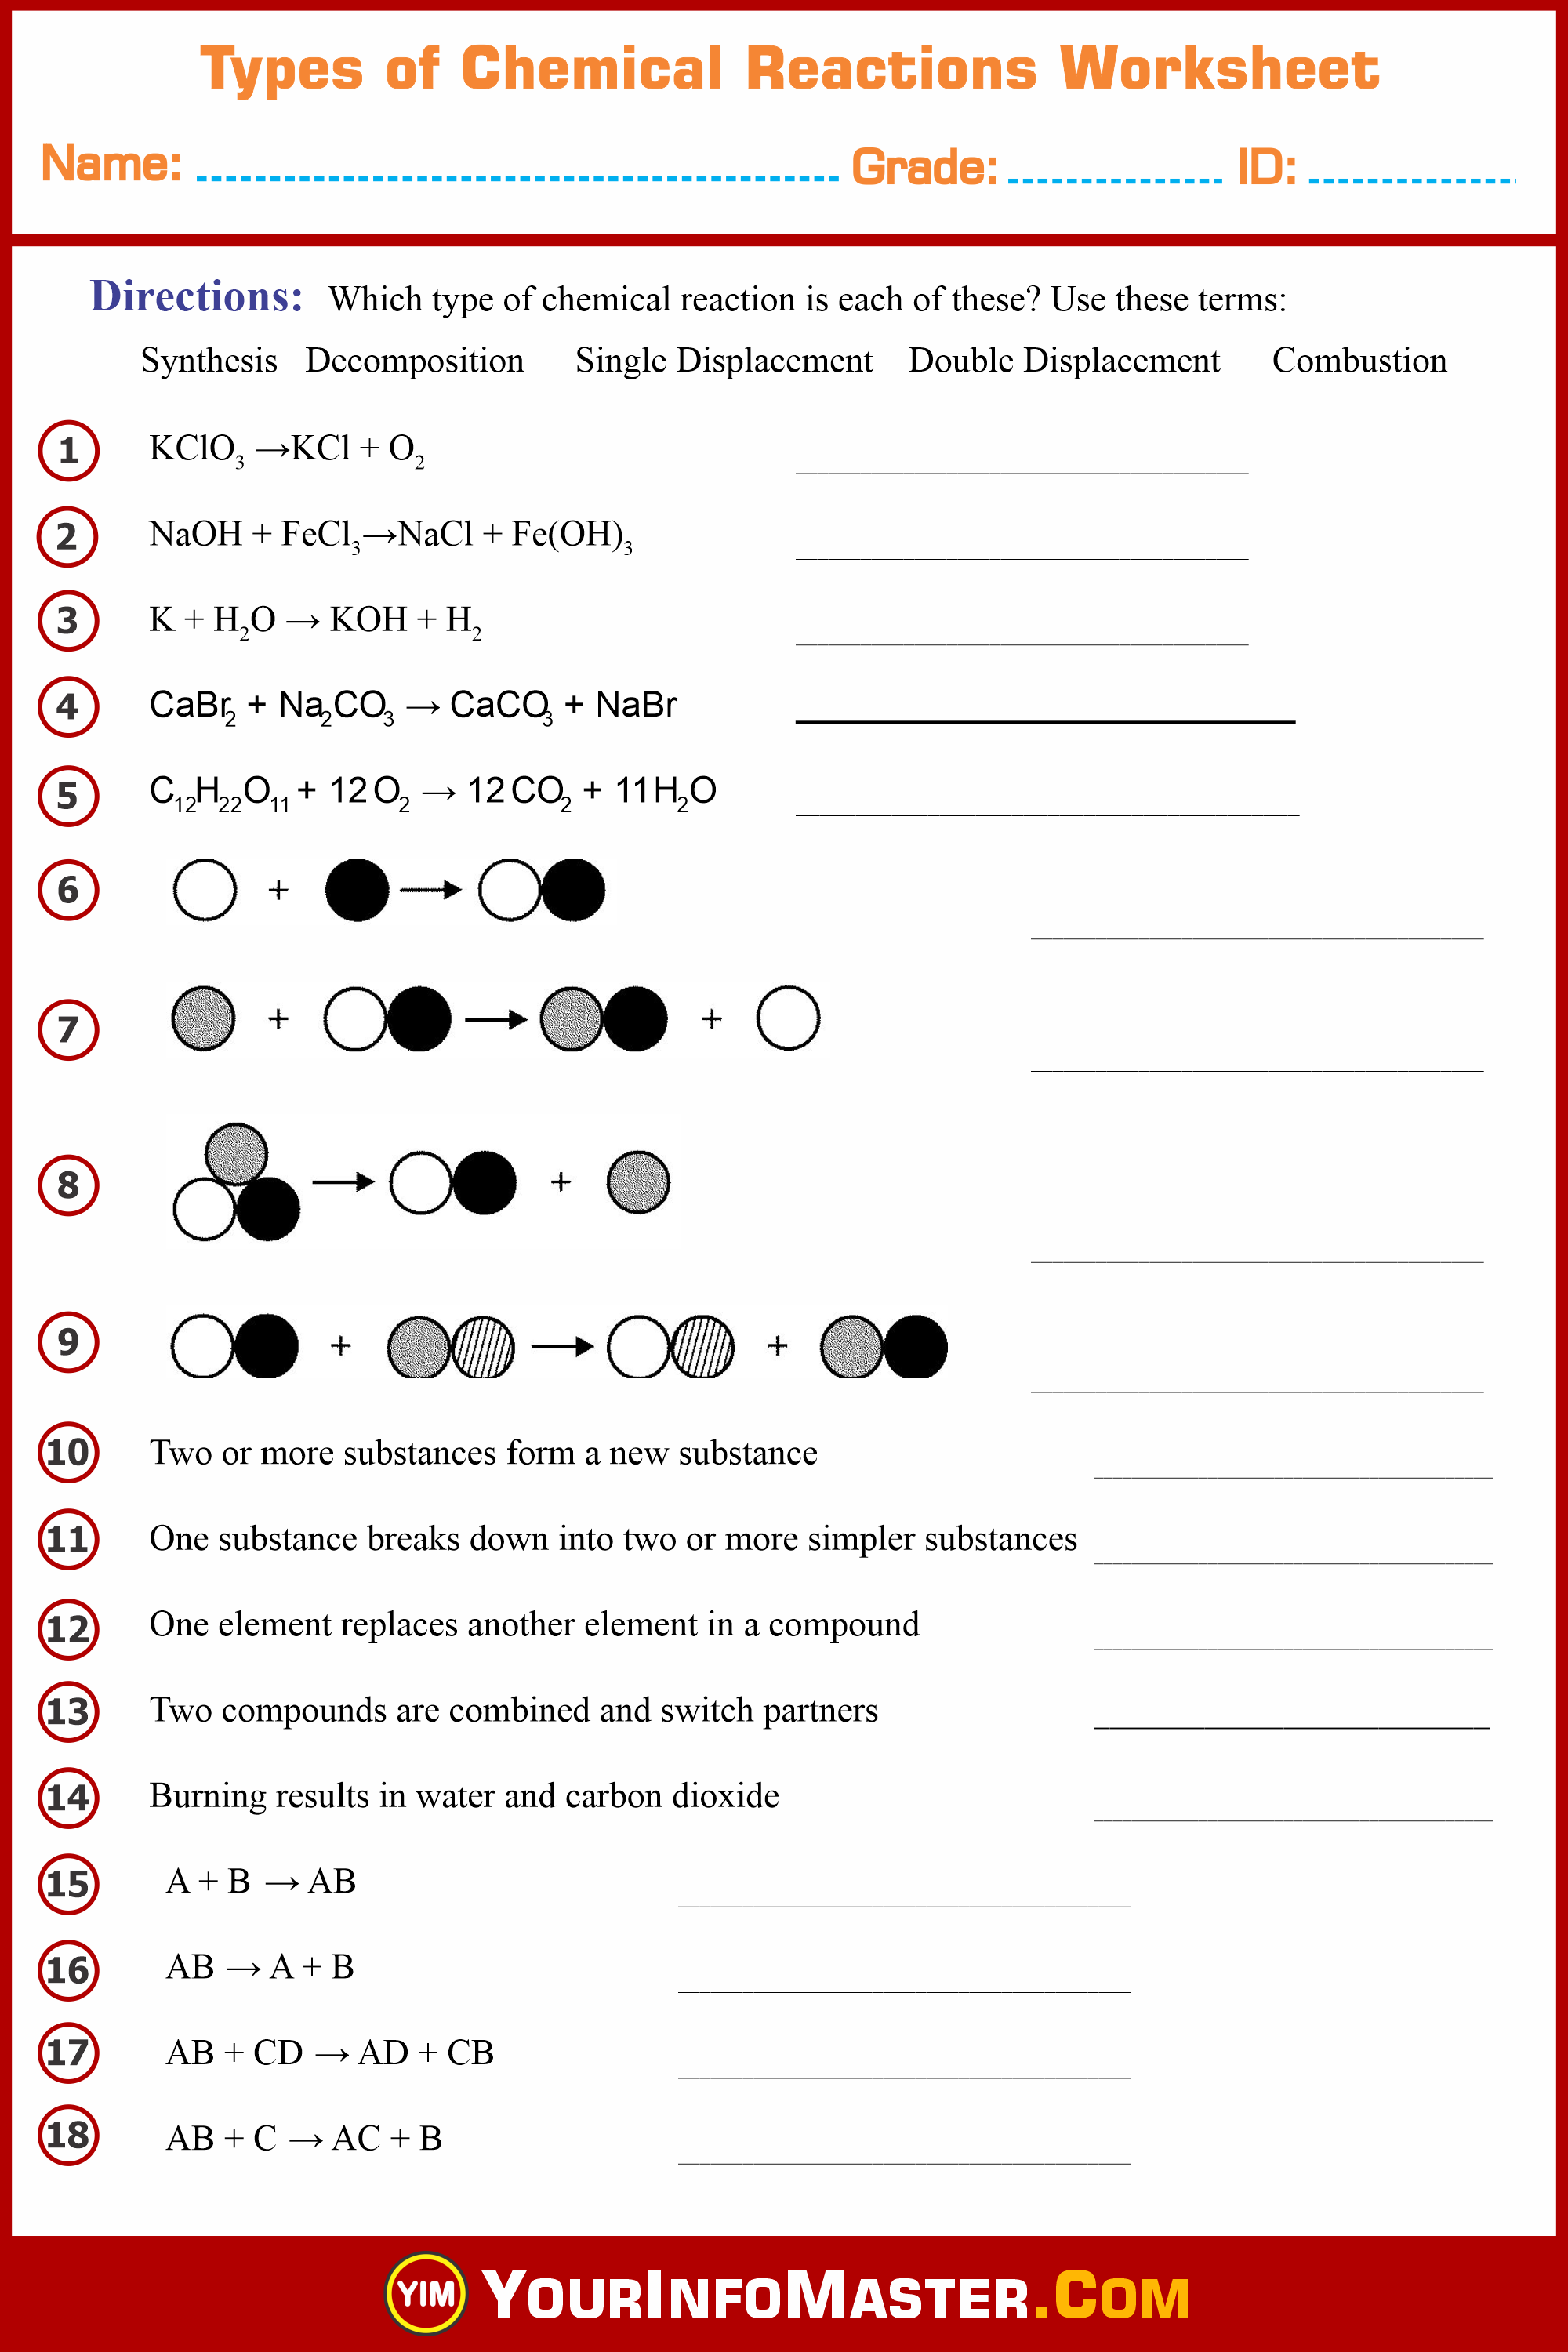 Chemistry Worksheets, Free Worksheets pdf, Types of Chemical Reactions Worksheet, Worksheet